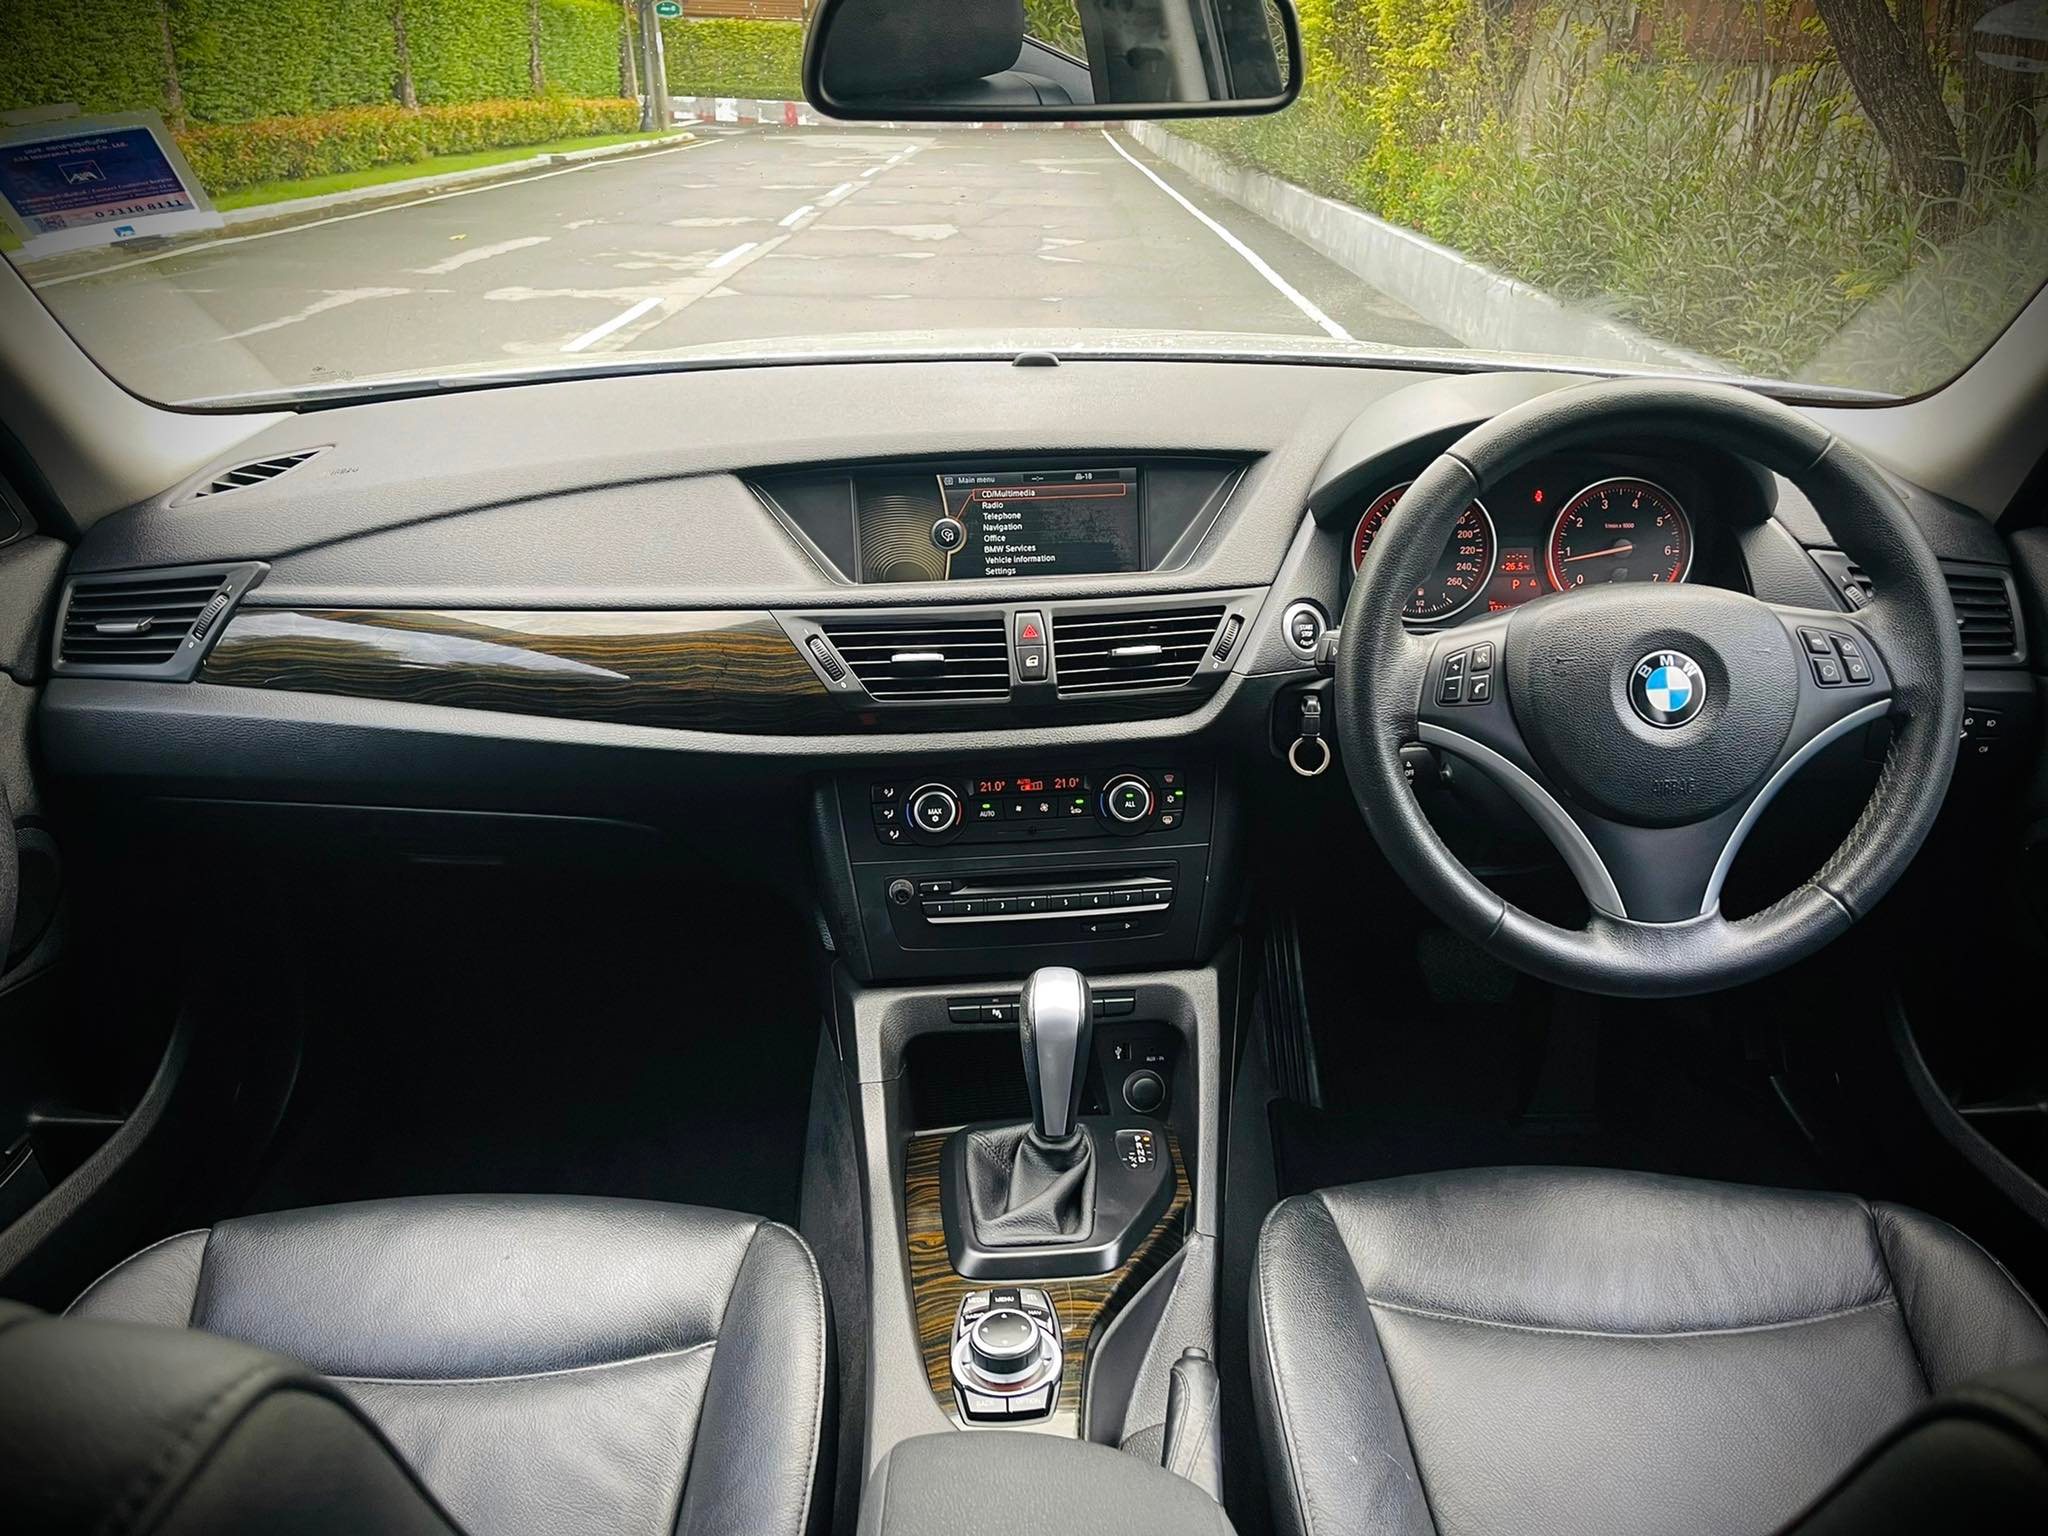 BMW X1 2.0 HighLine สวยในทุกทุก มุมมอง